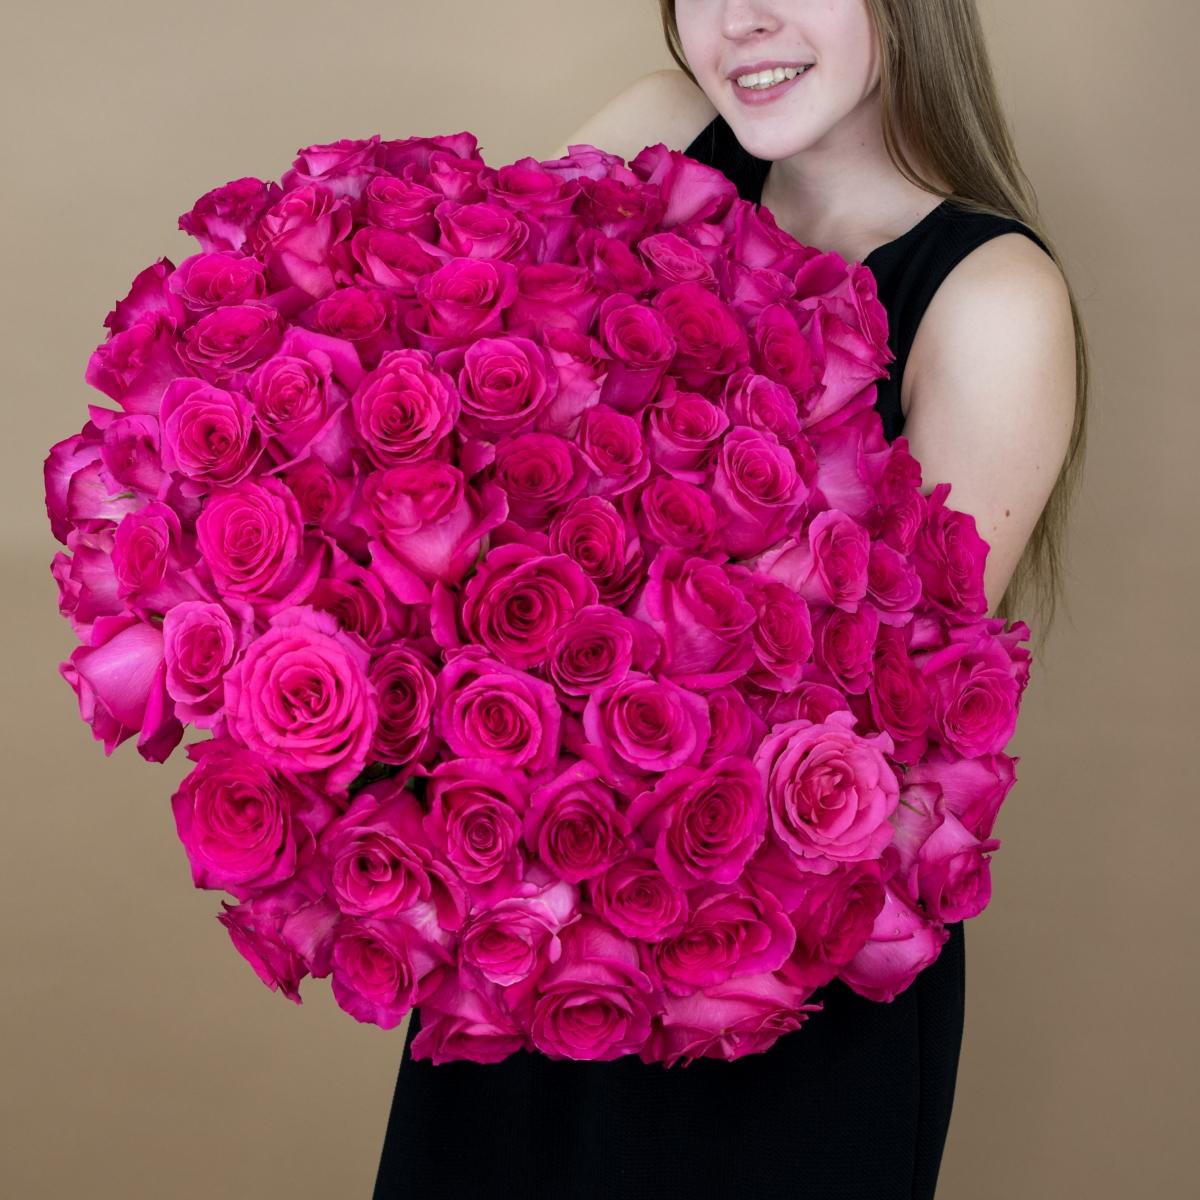 Букет из розовых роз 75 шт. (40 см) артикул букета  6468